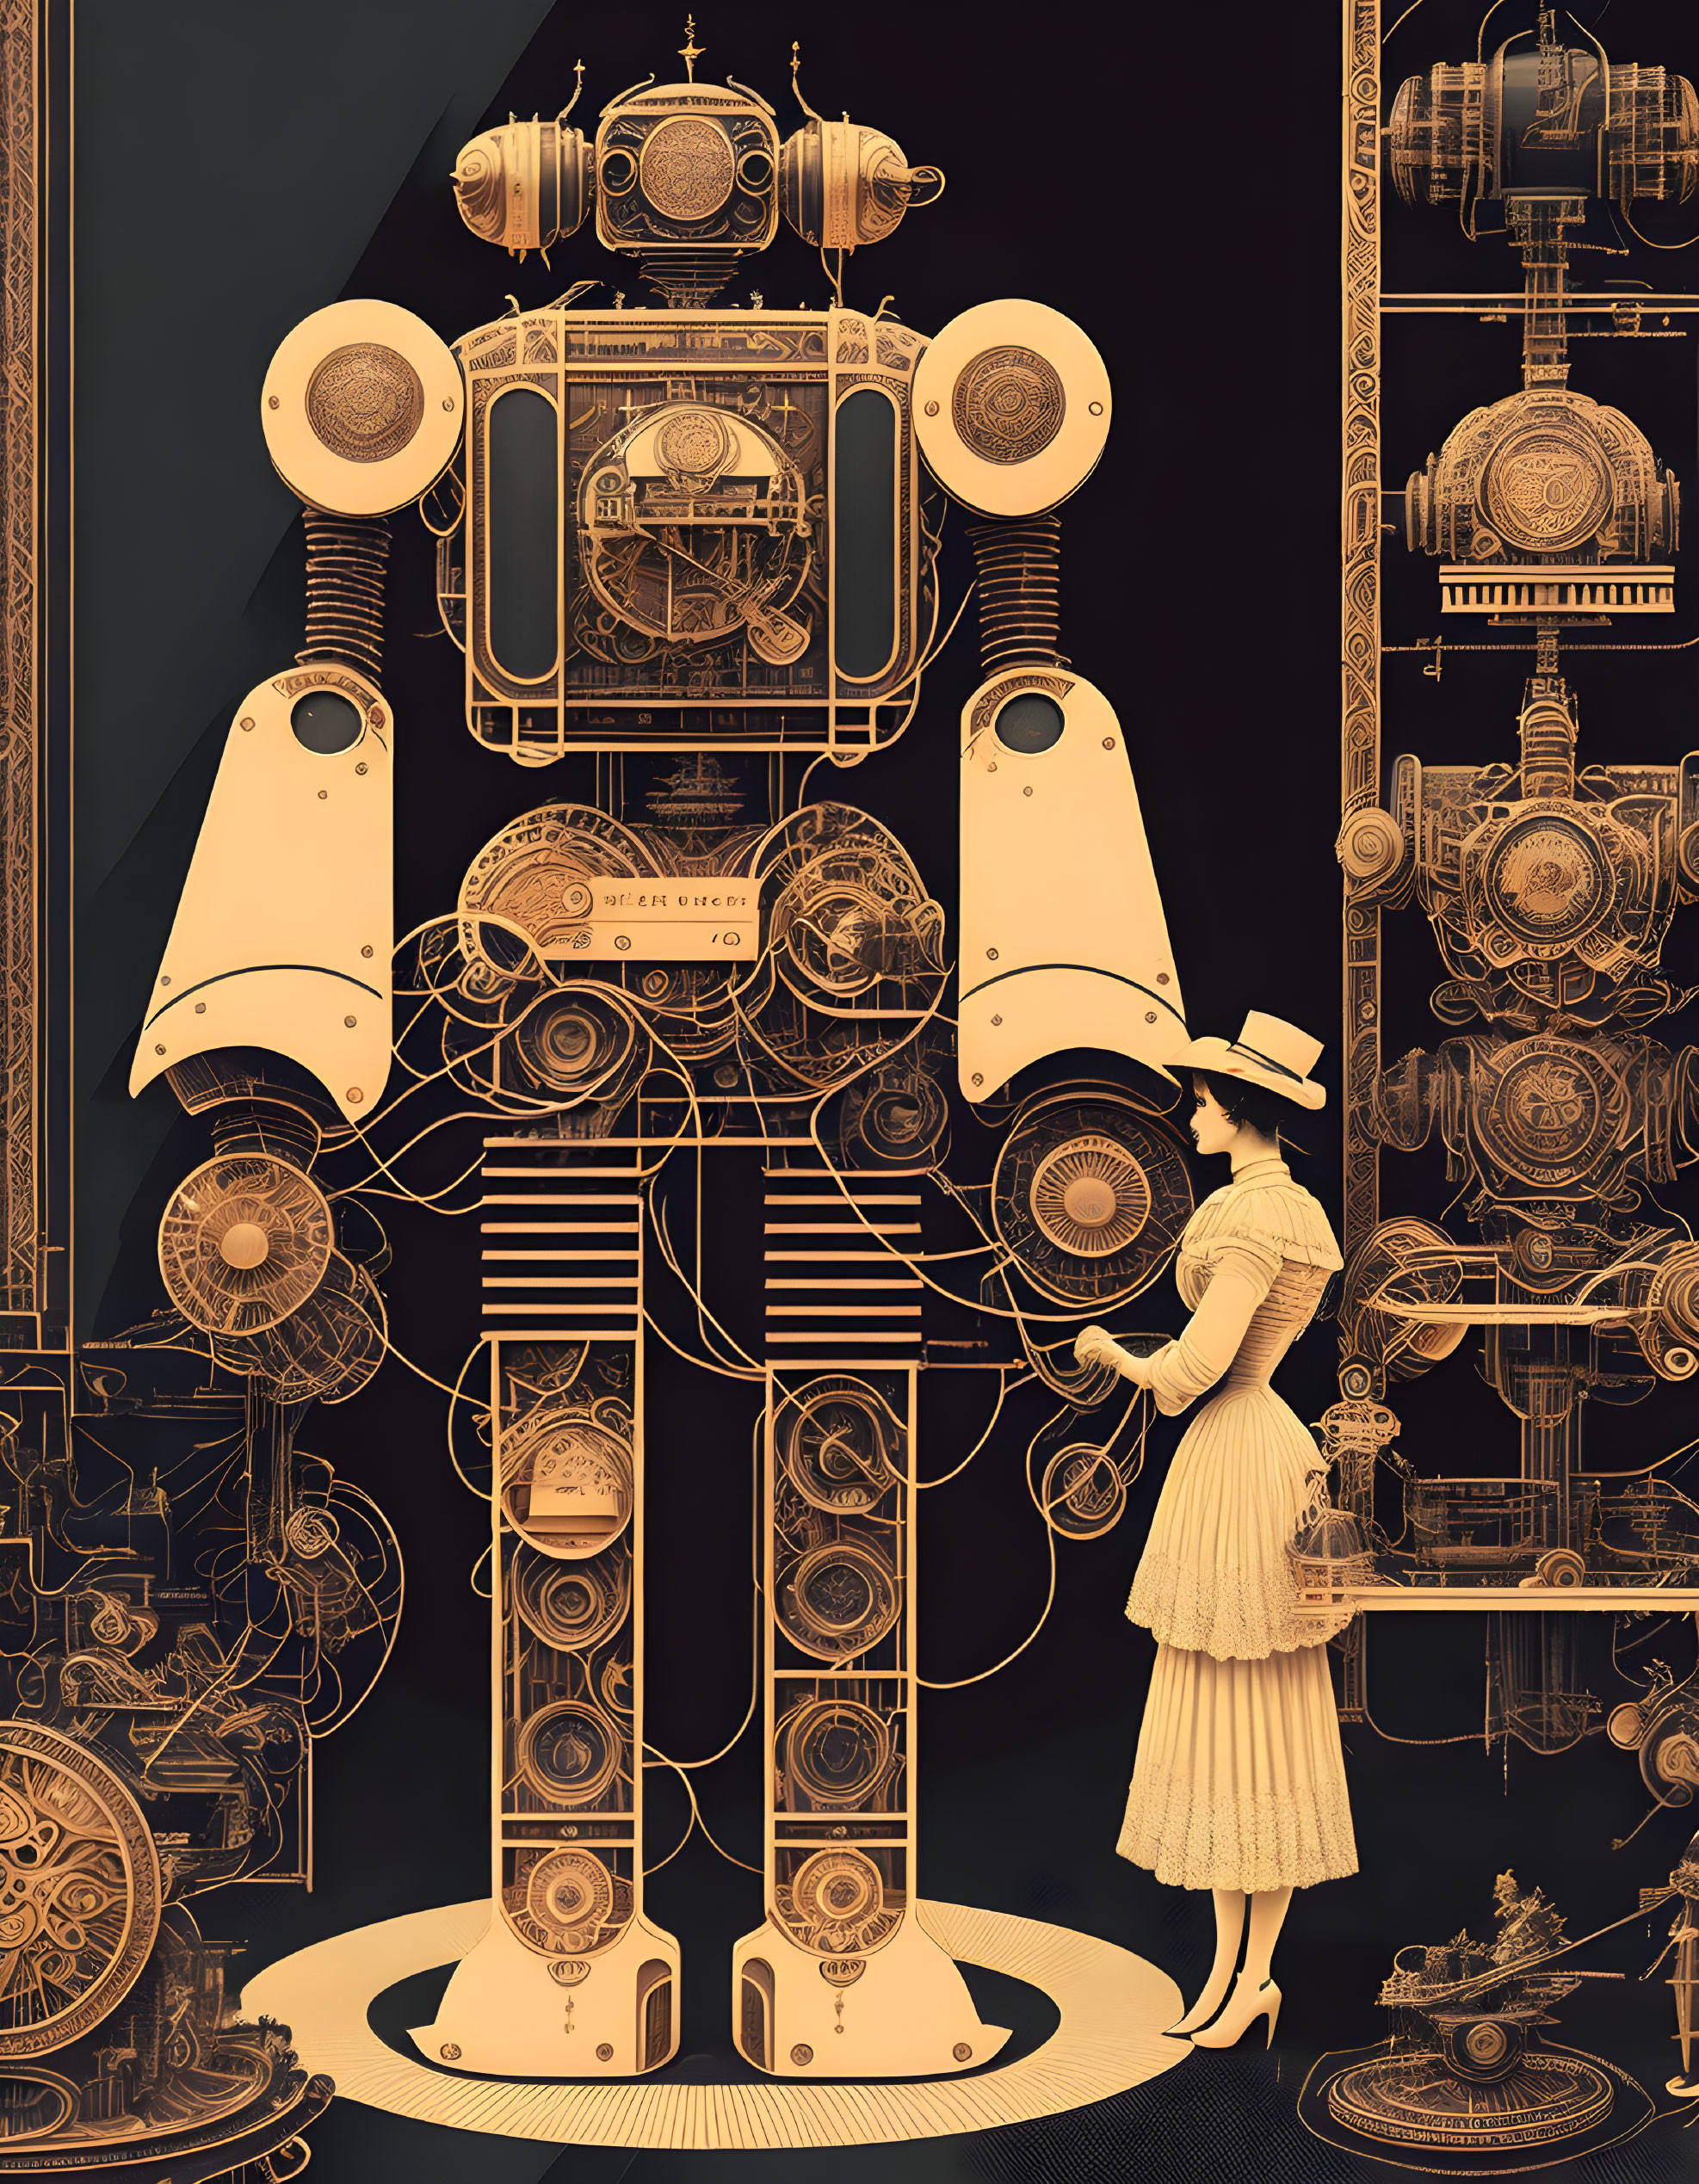 Victorian woman gazes at steampunk robot in sepia tone scene